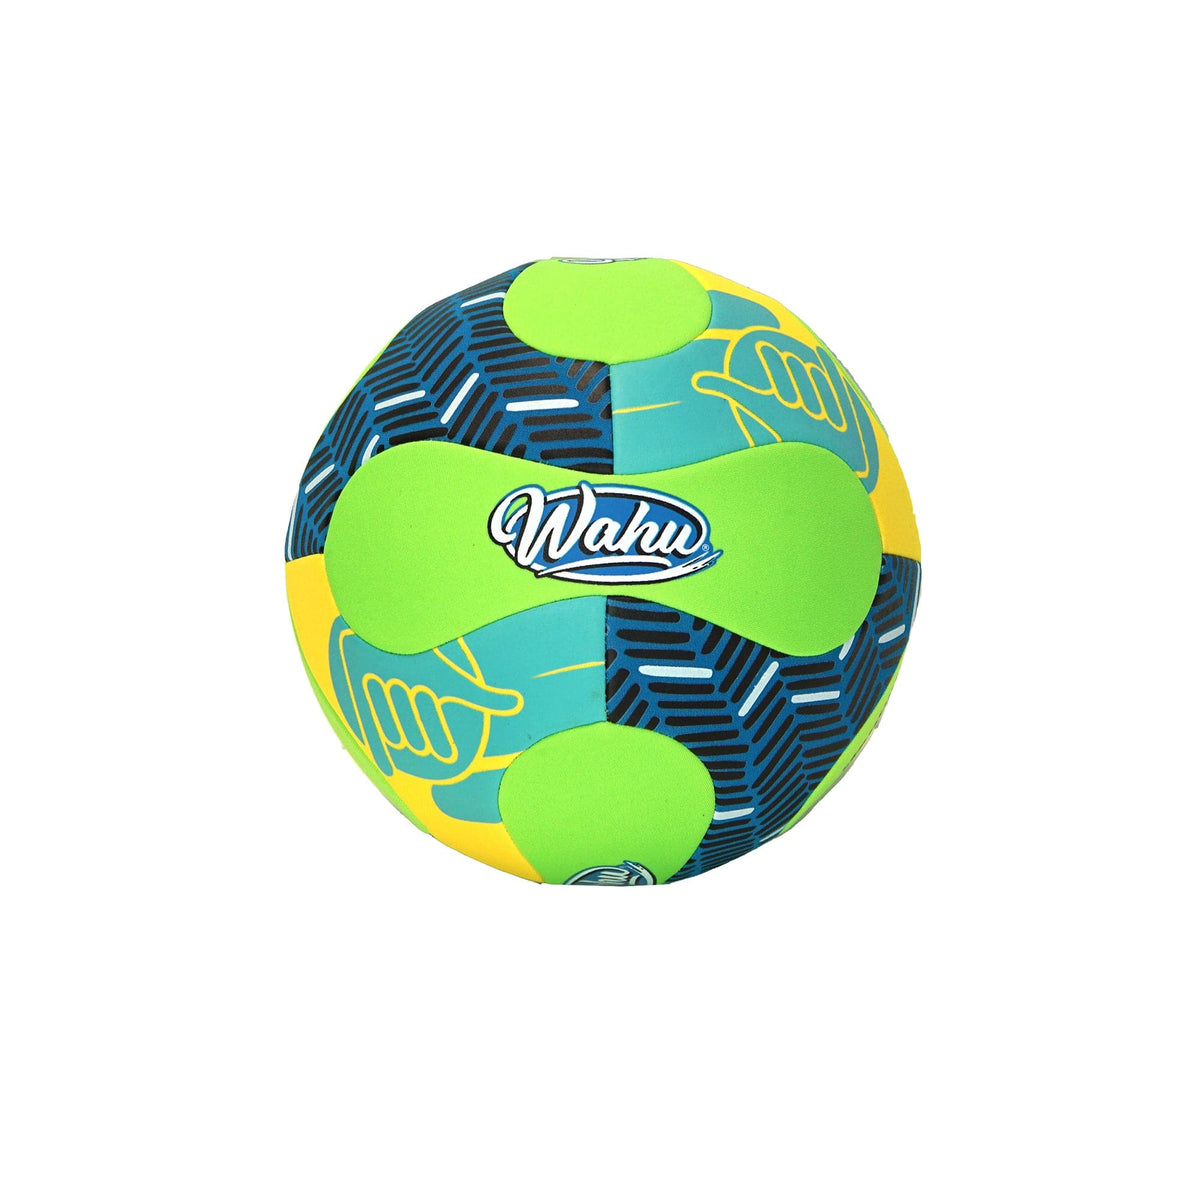 Wahu Soccer Ball